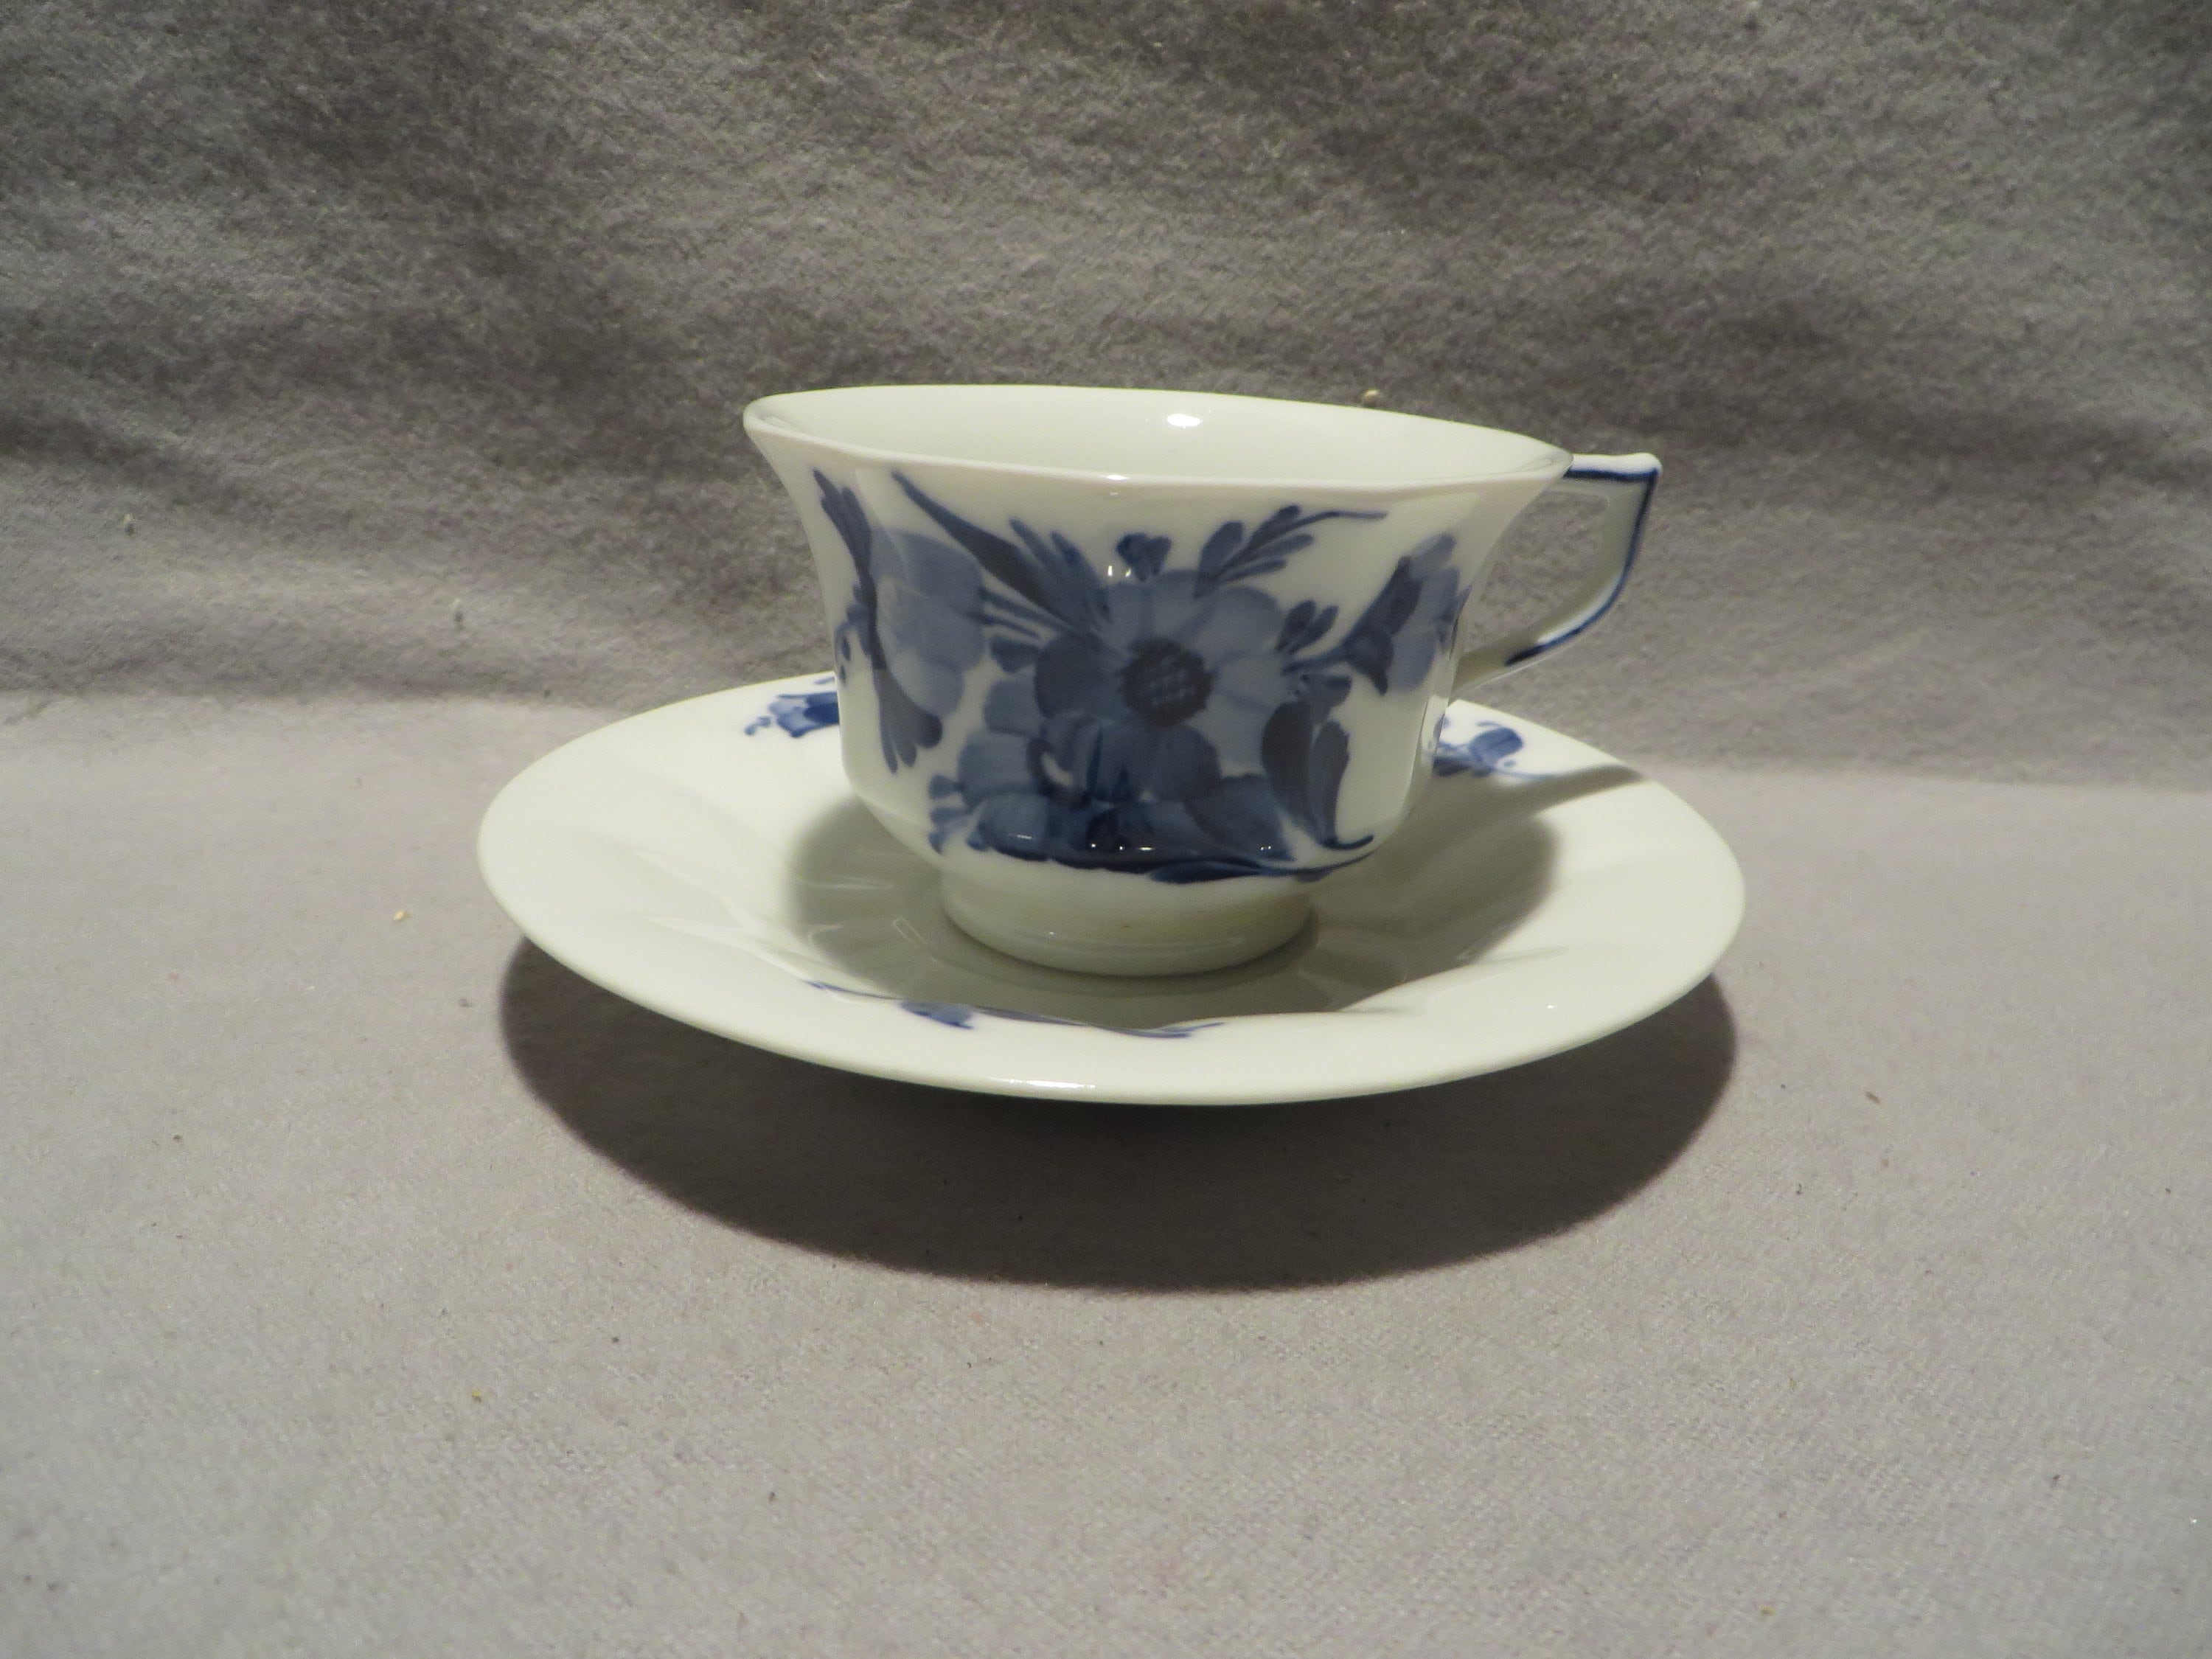 KAD ringen - Royal Copenhagen Blue Flower Braided Cup with High